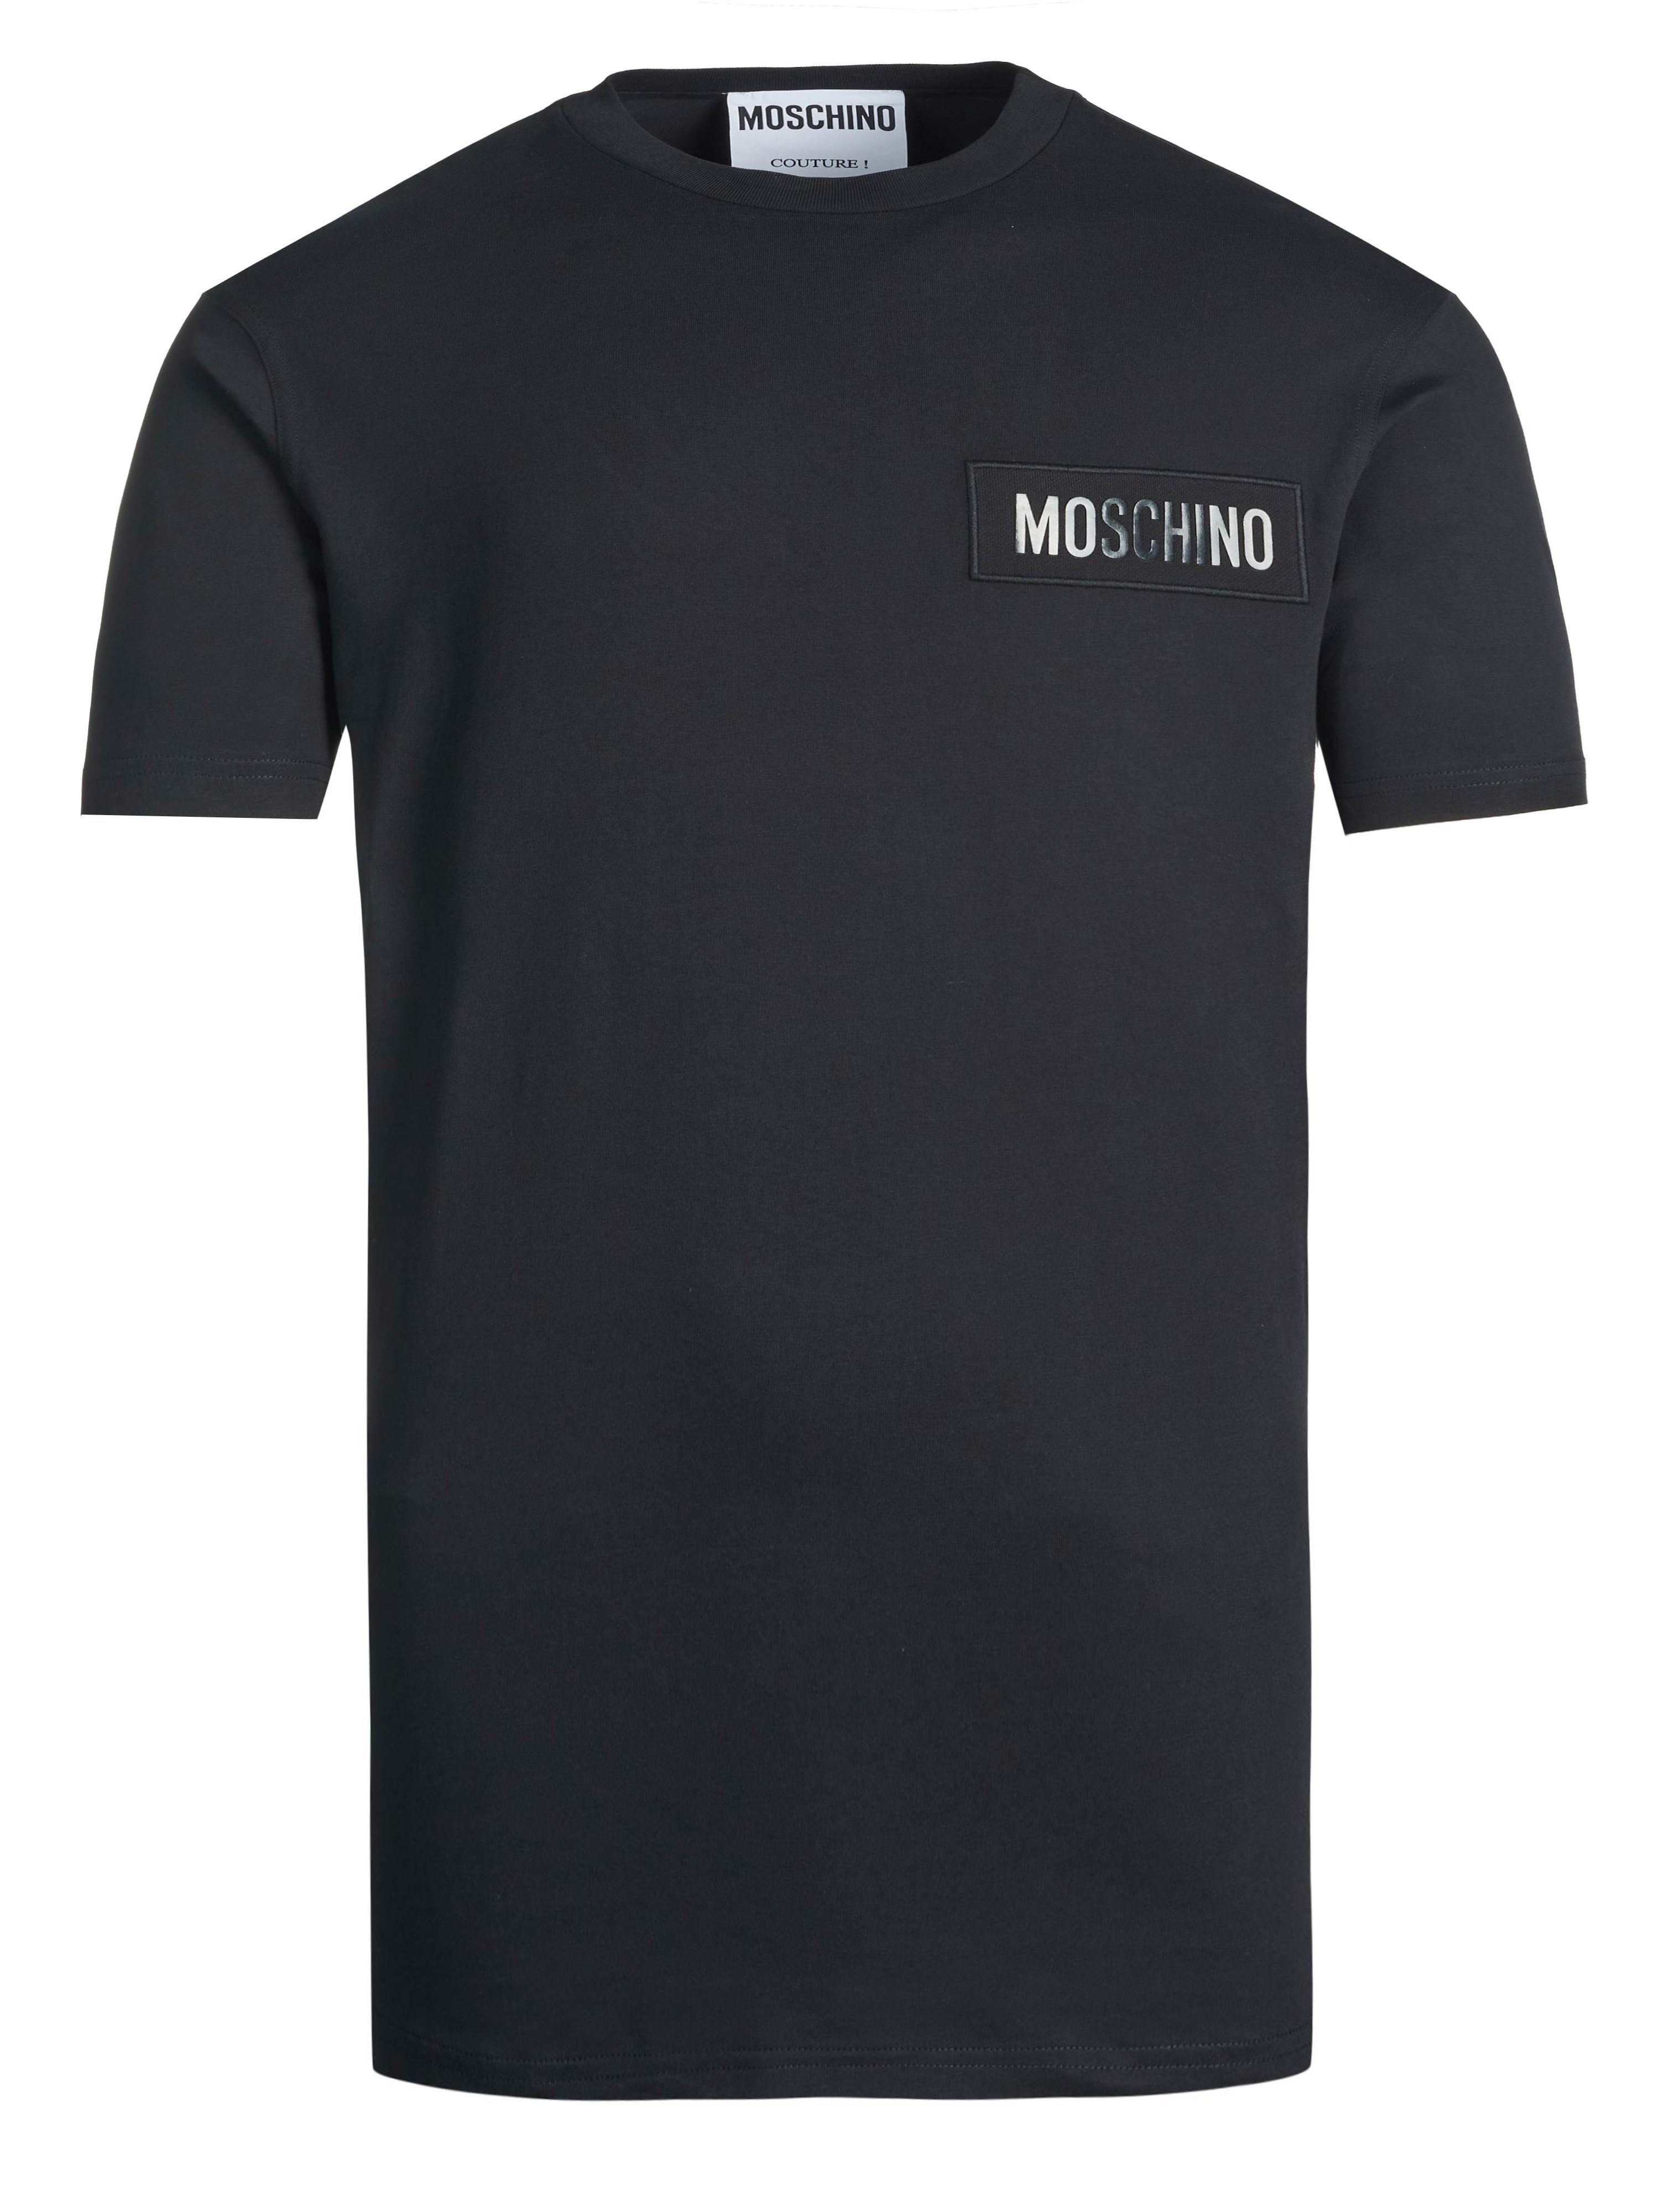 Moschino T-Shirt Moschino Couture! T-Shirt schwarz